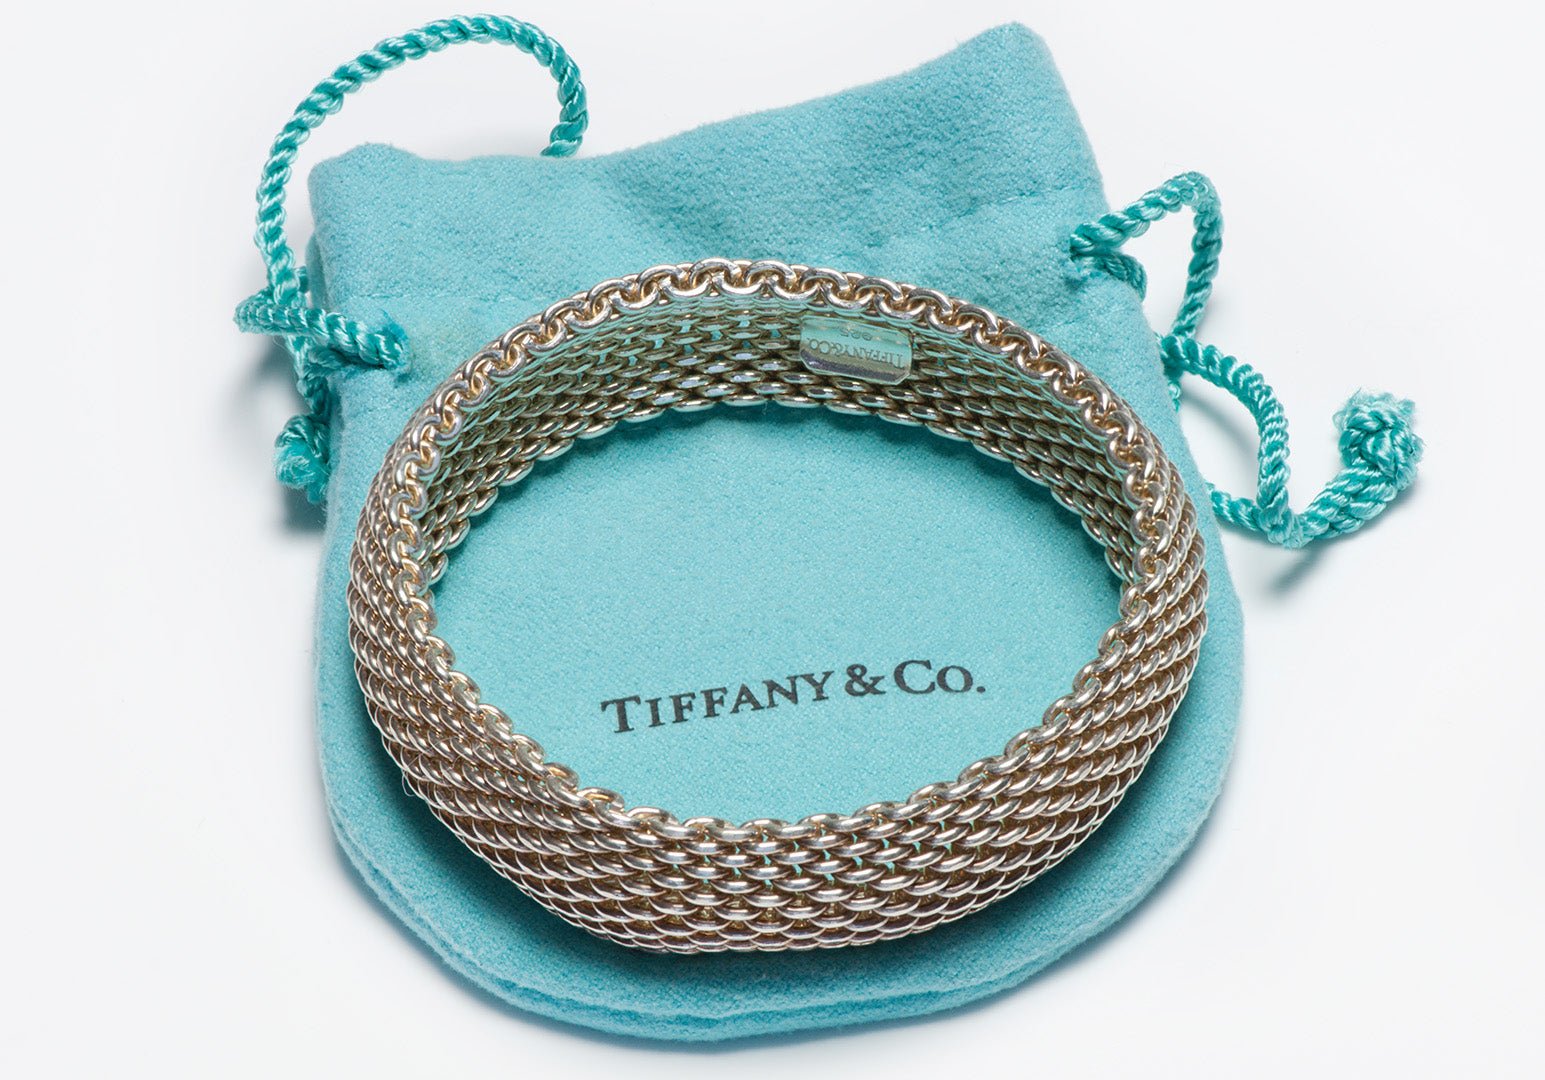 Tiffany & Co. Silver Woven Mesh Bracelet